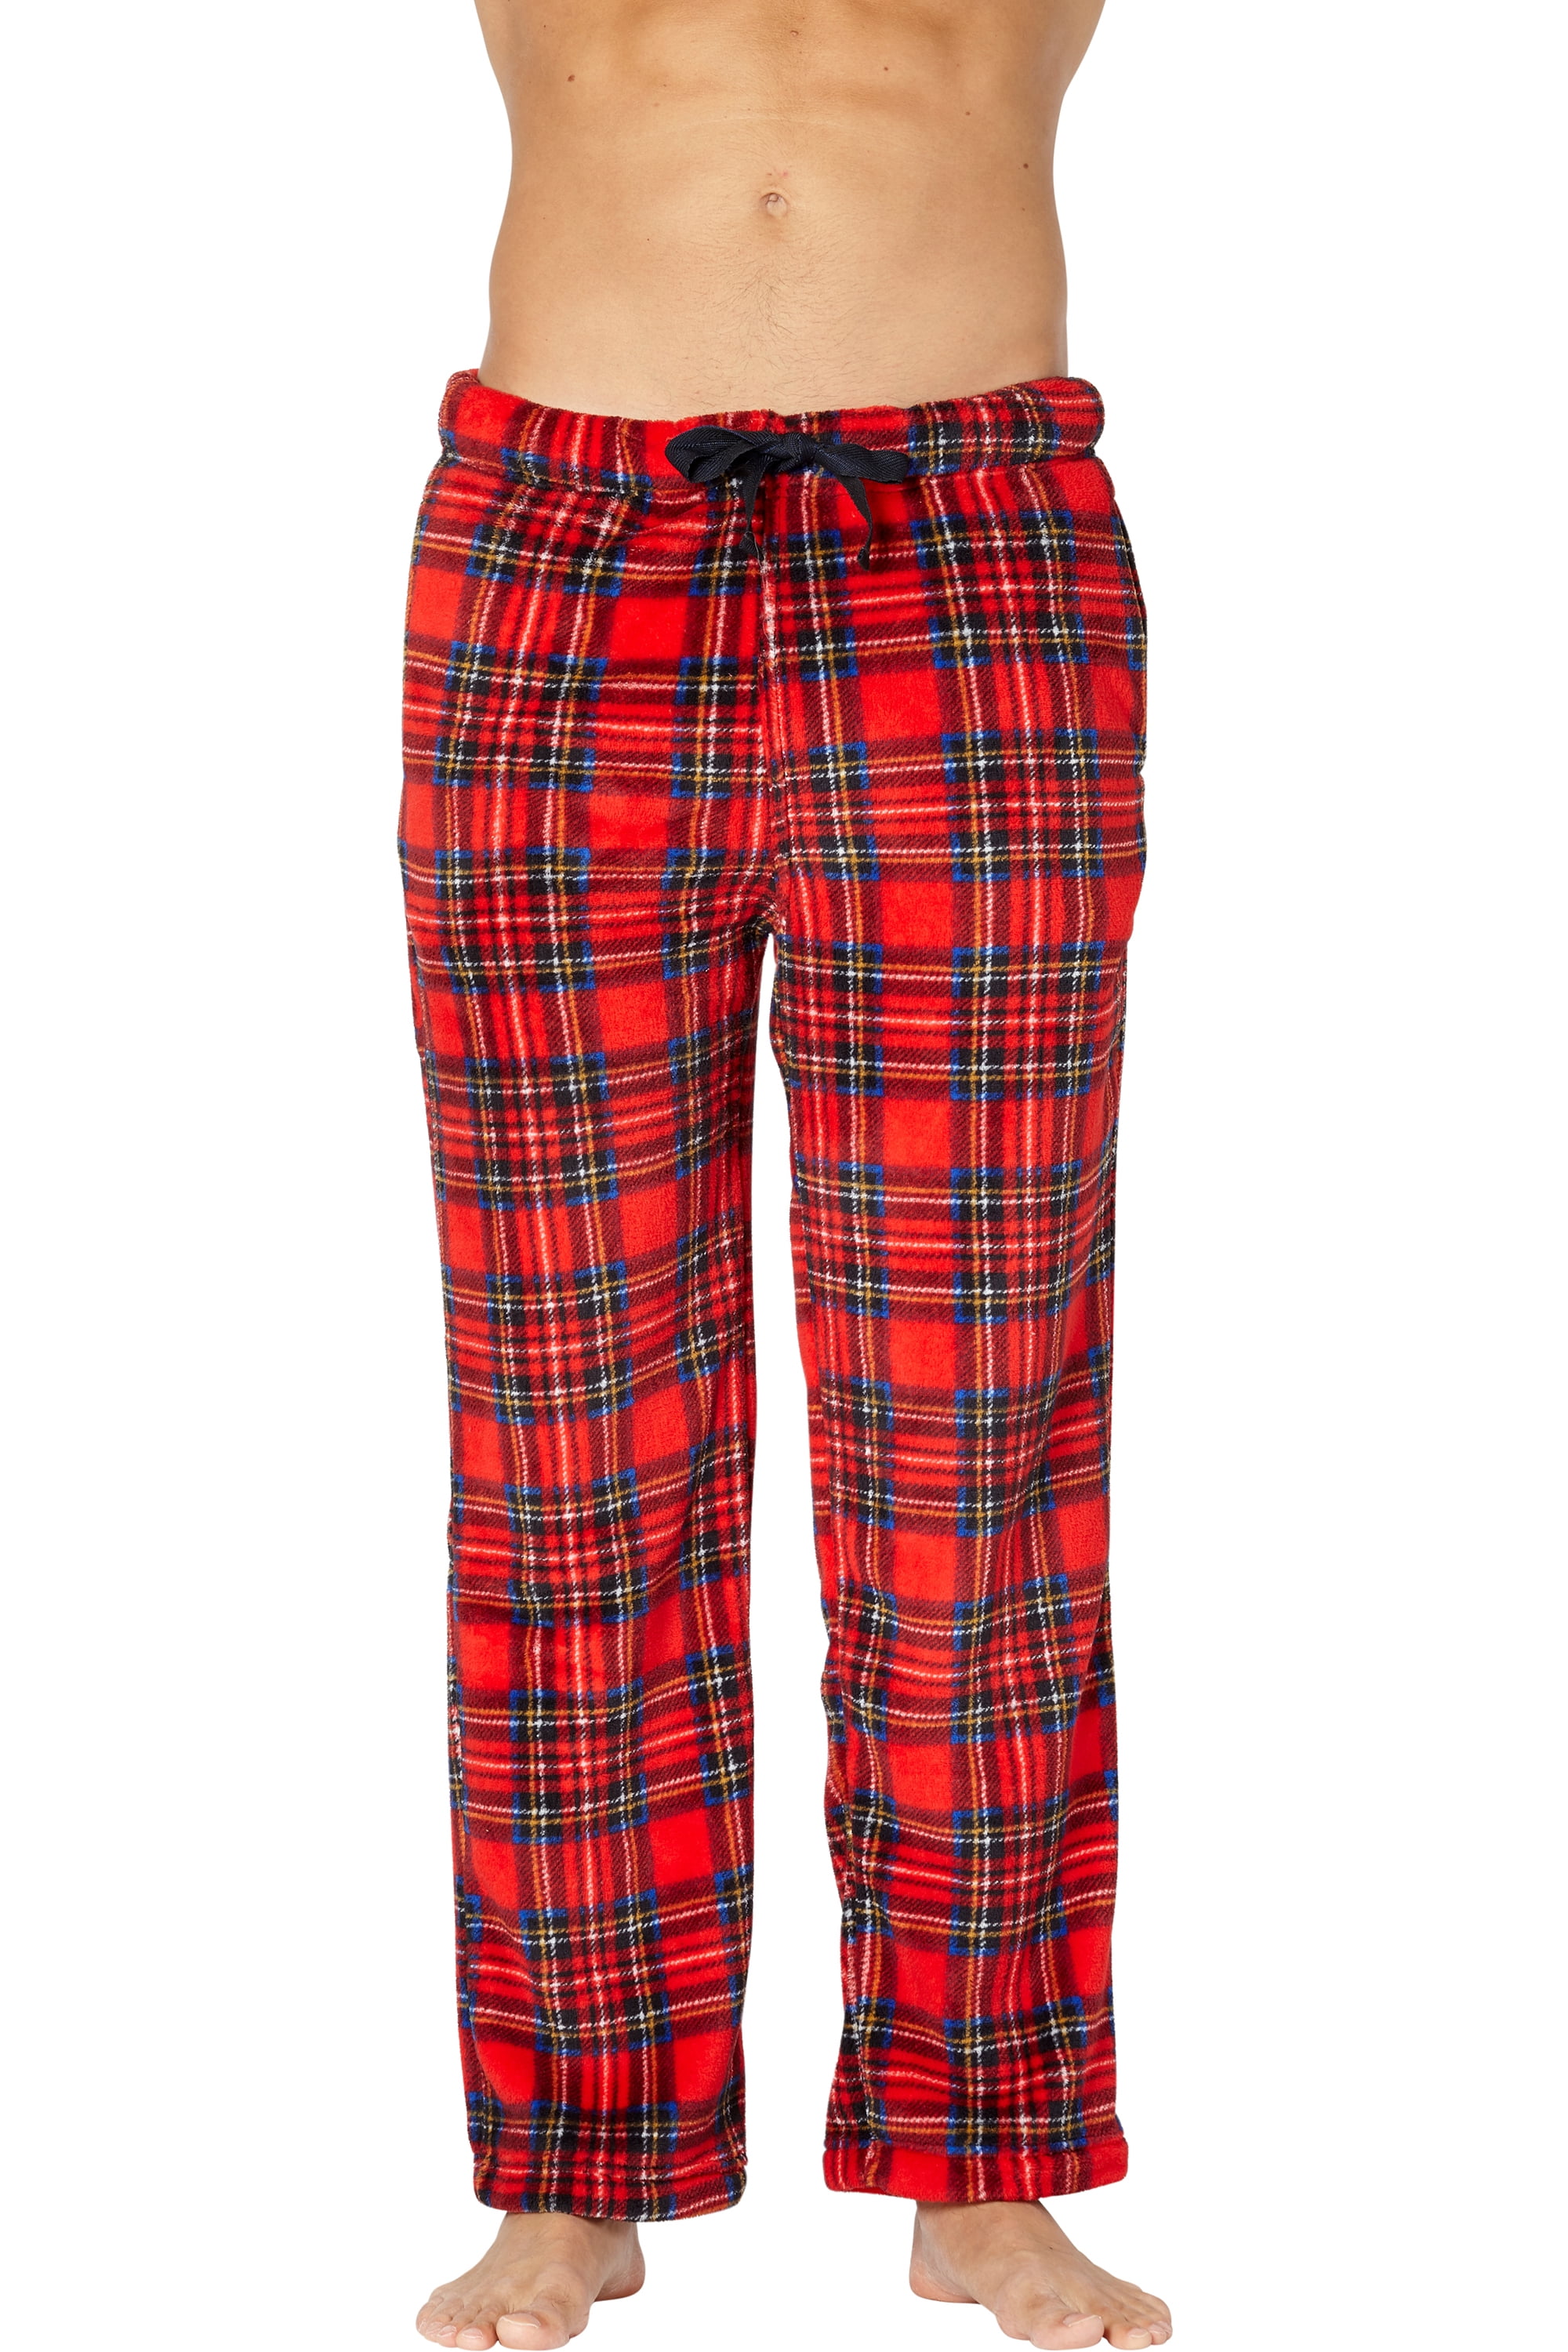 Men's Wrangler Lumberjack Plaid Cozy Plush Sleep Pants (Red, S)